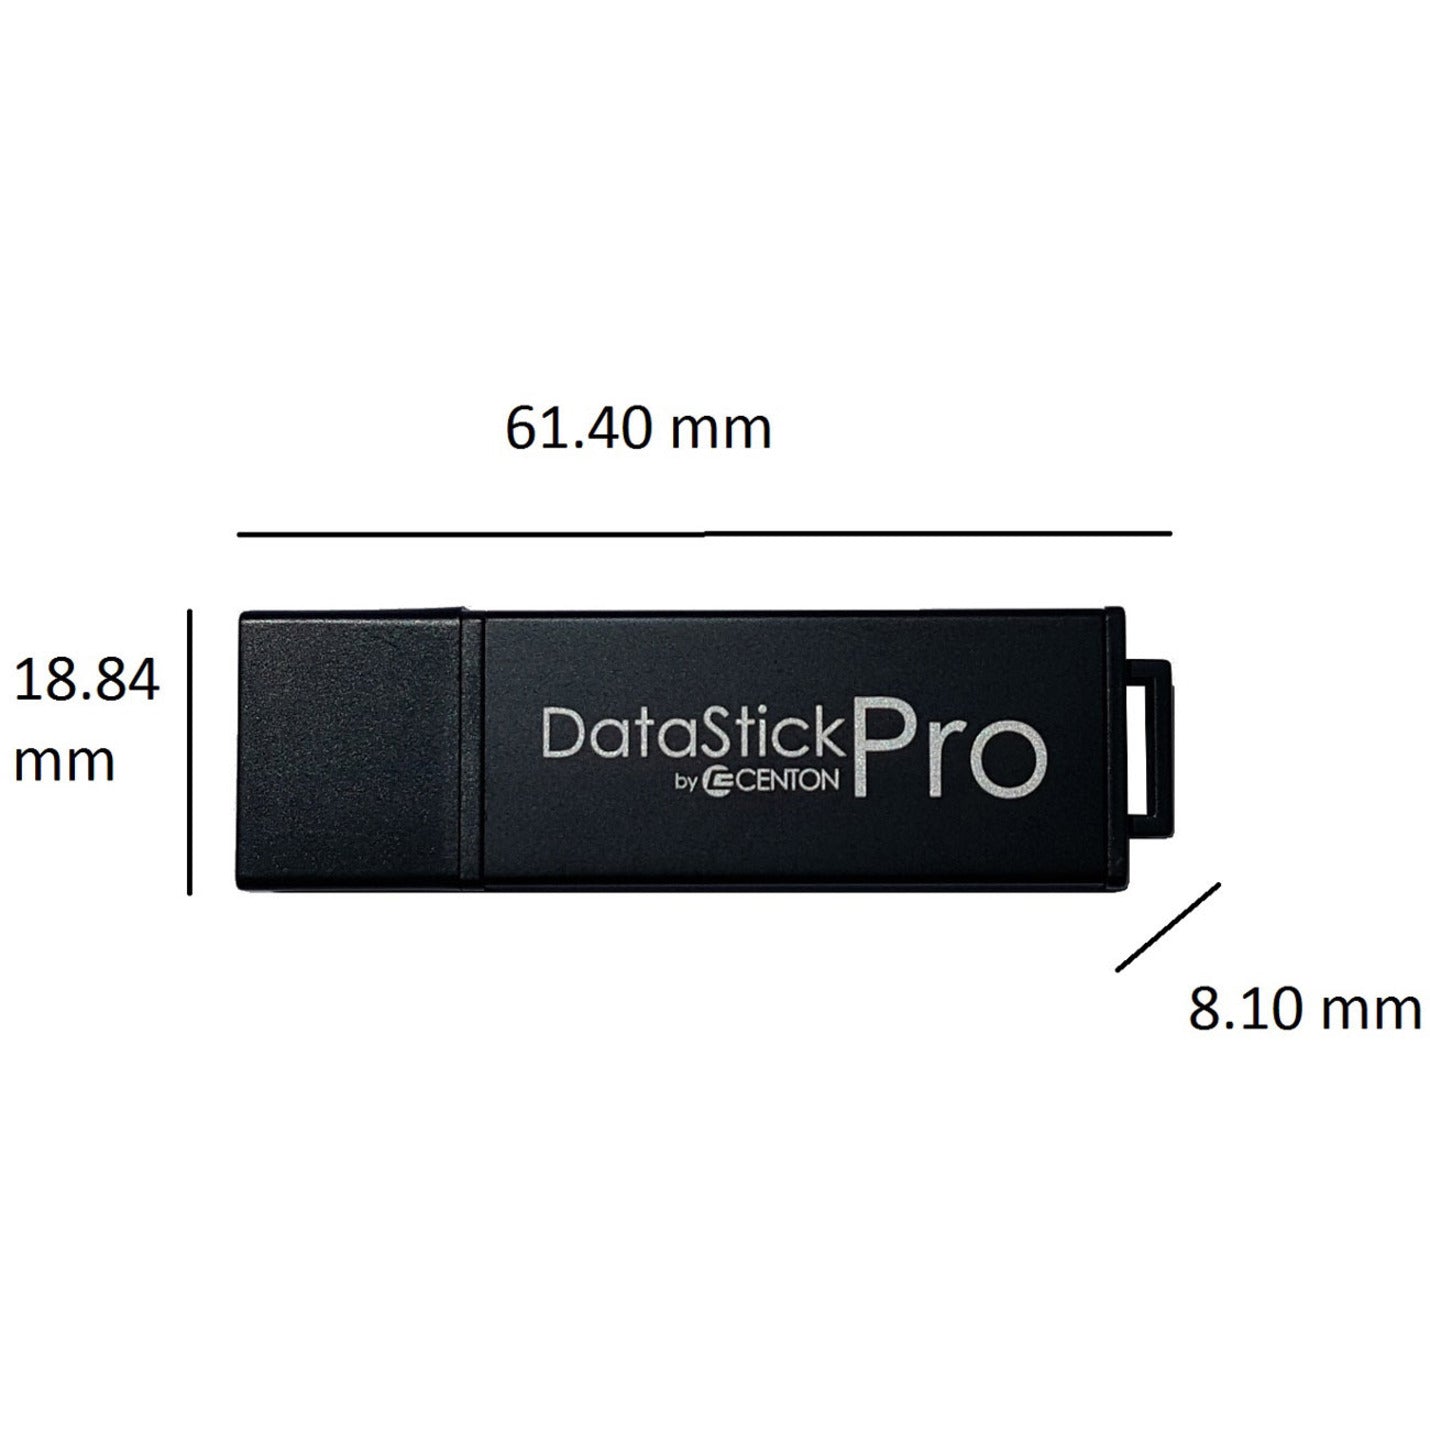 Centon S1-U3P6-128G DataStick Pro USB 3.0 Flash Drive, 128GB Storage Capacity